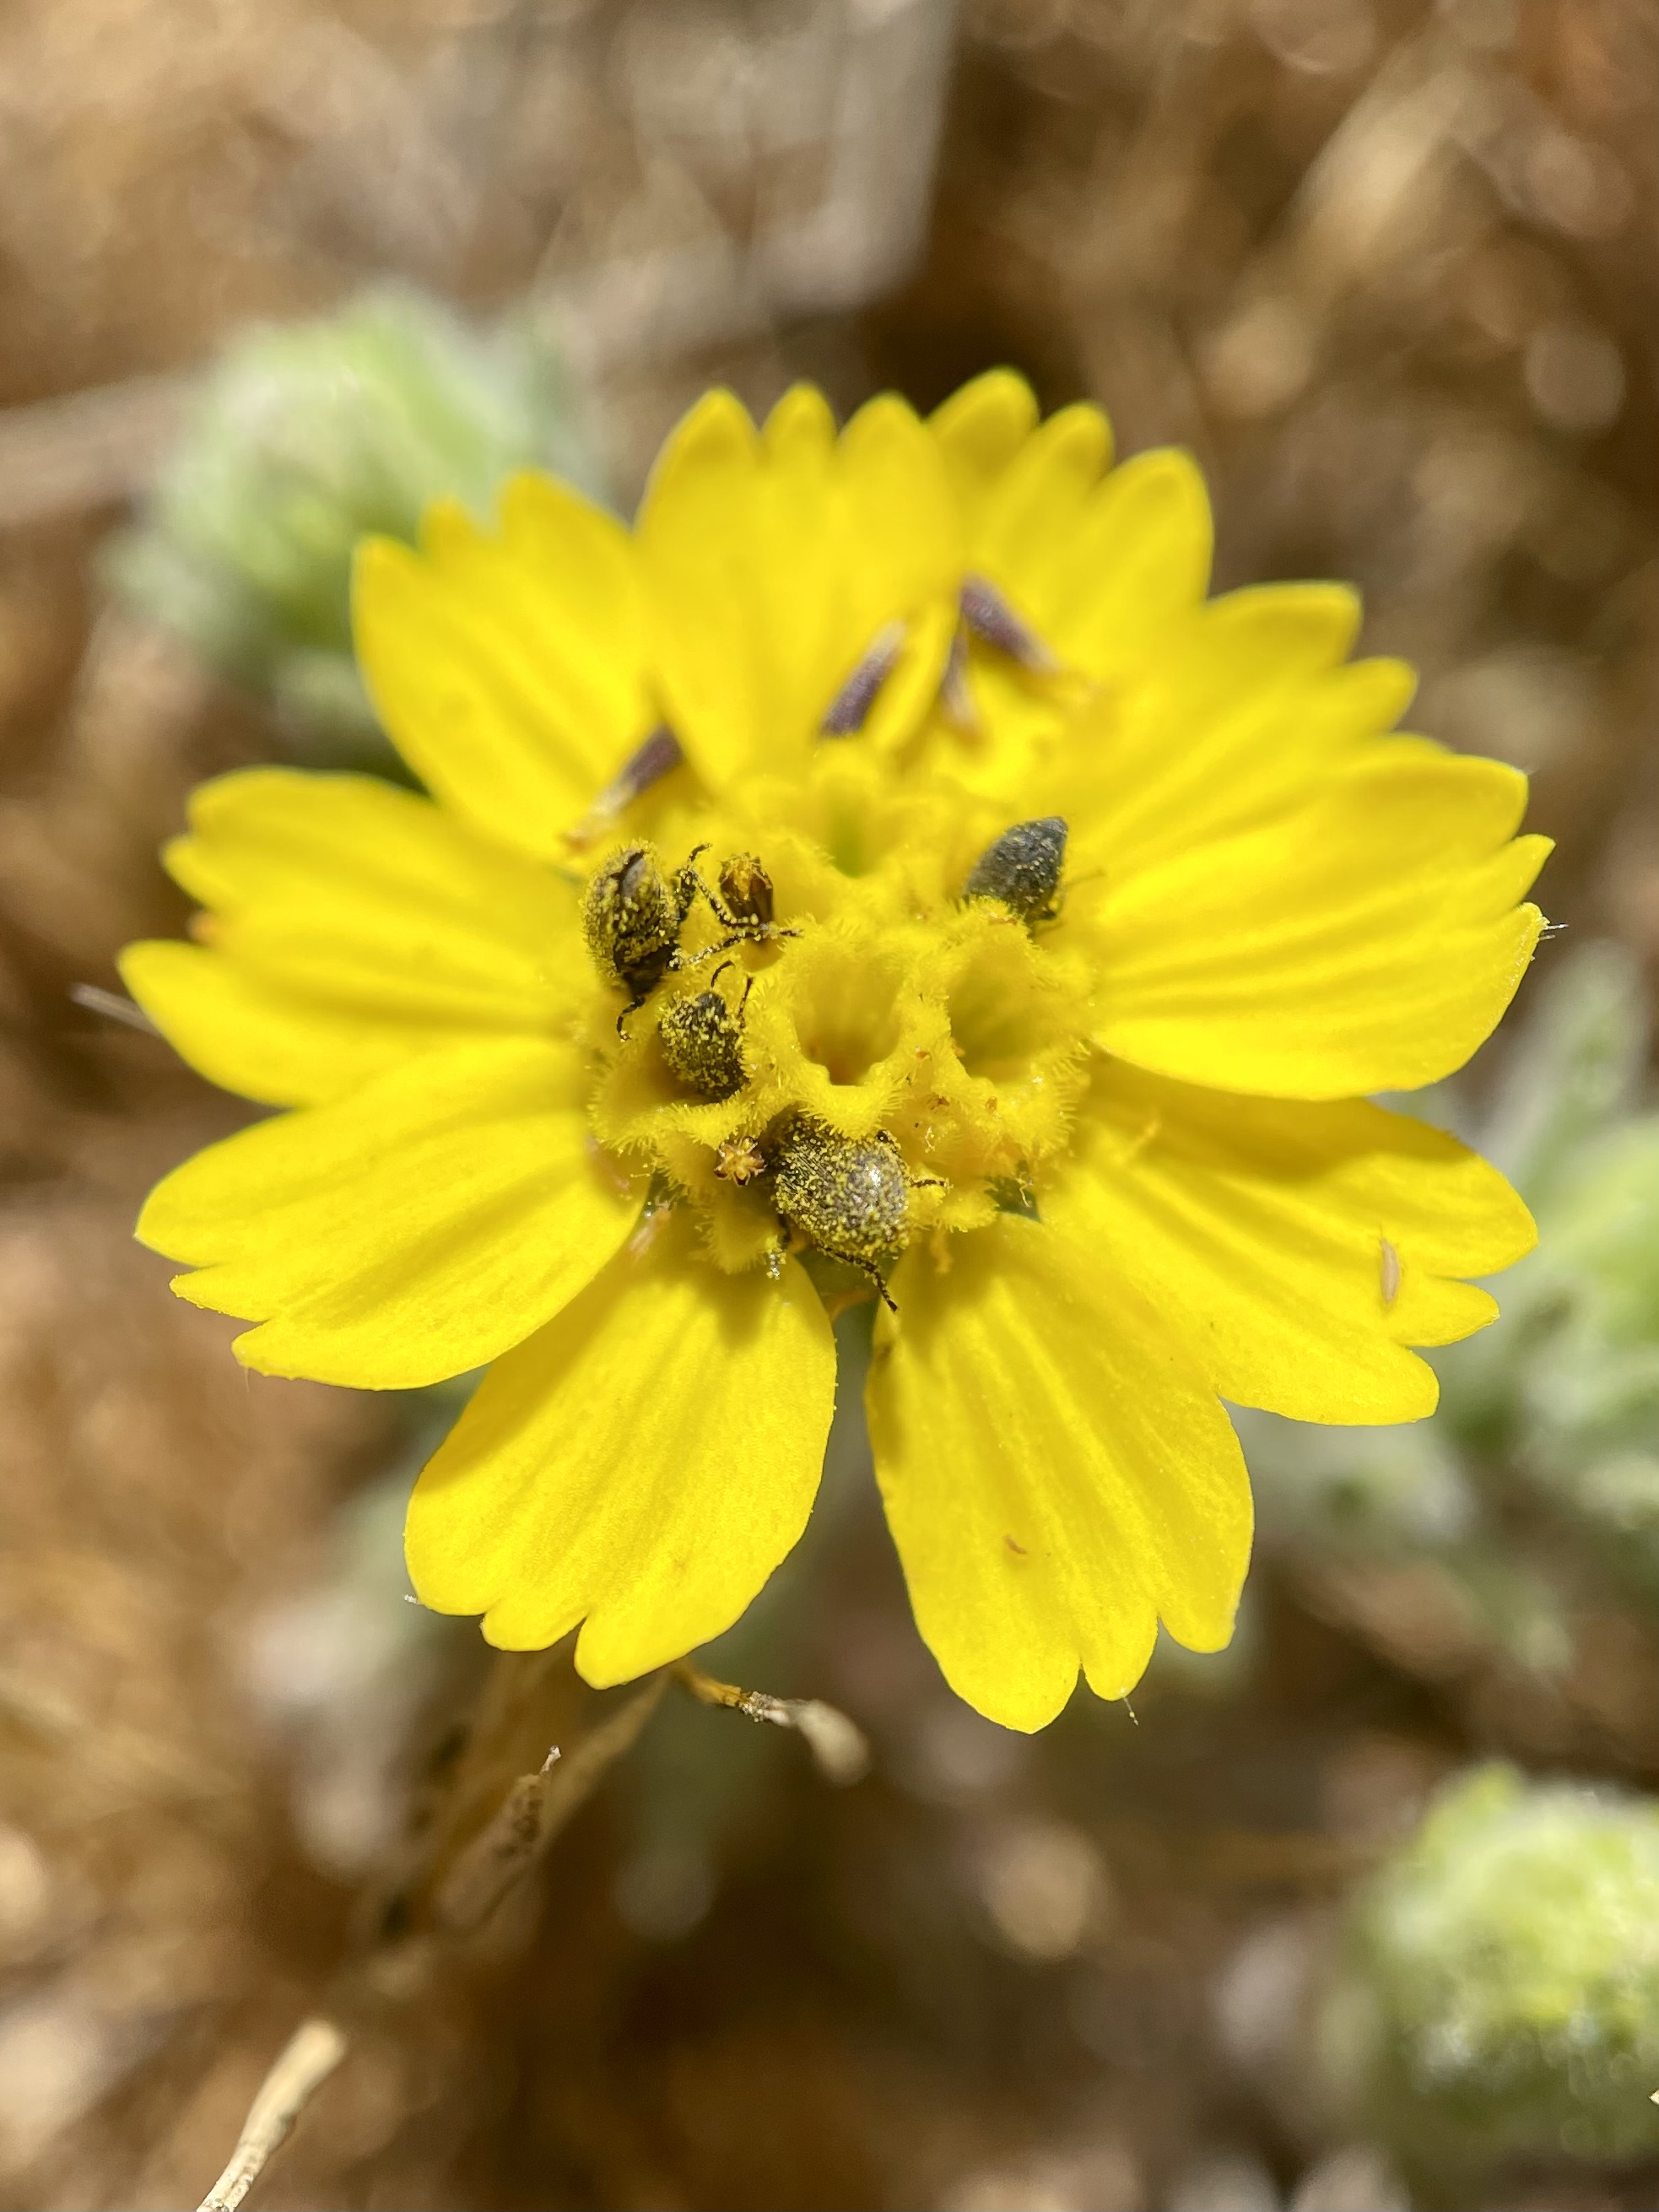 Beetles covered in pollen while visiting disk flowers on Gaviota tarplant.